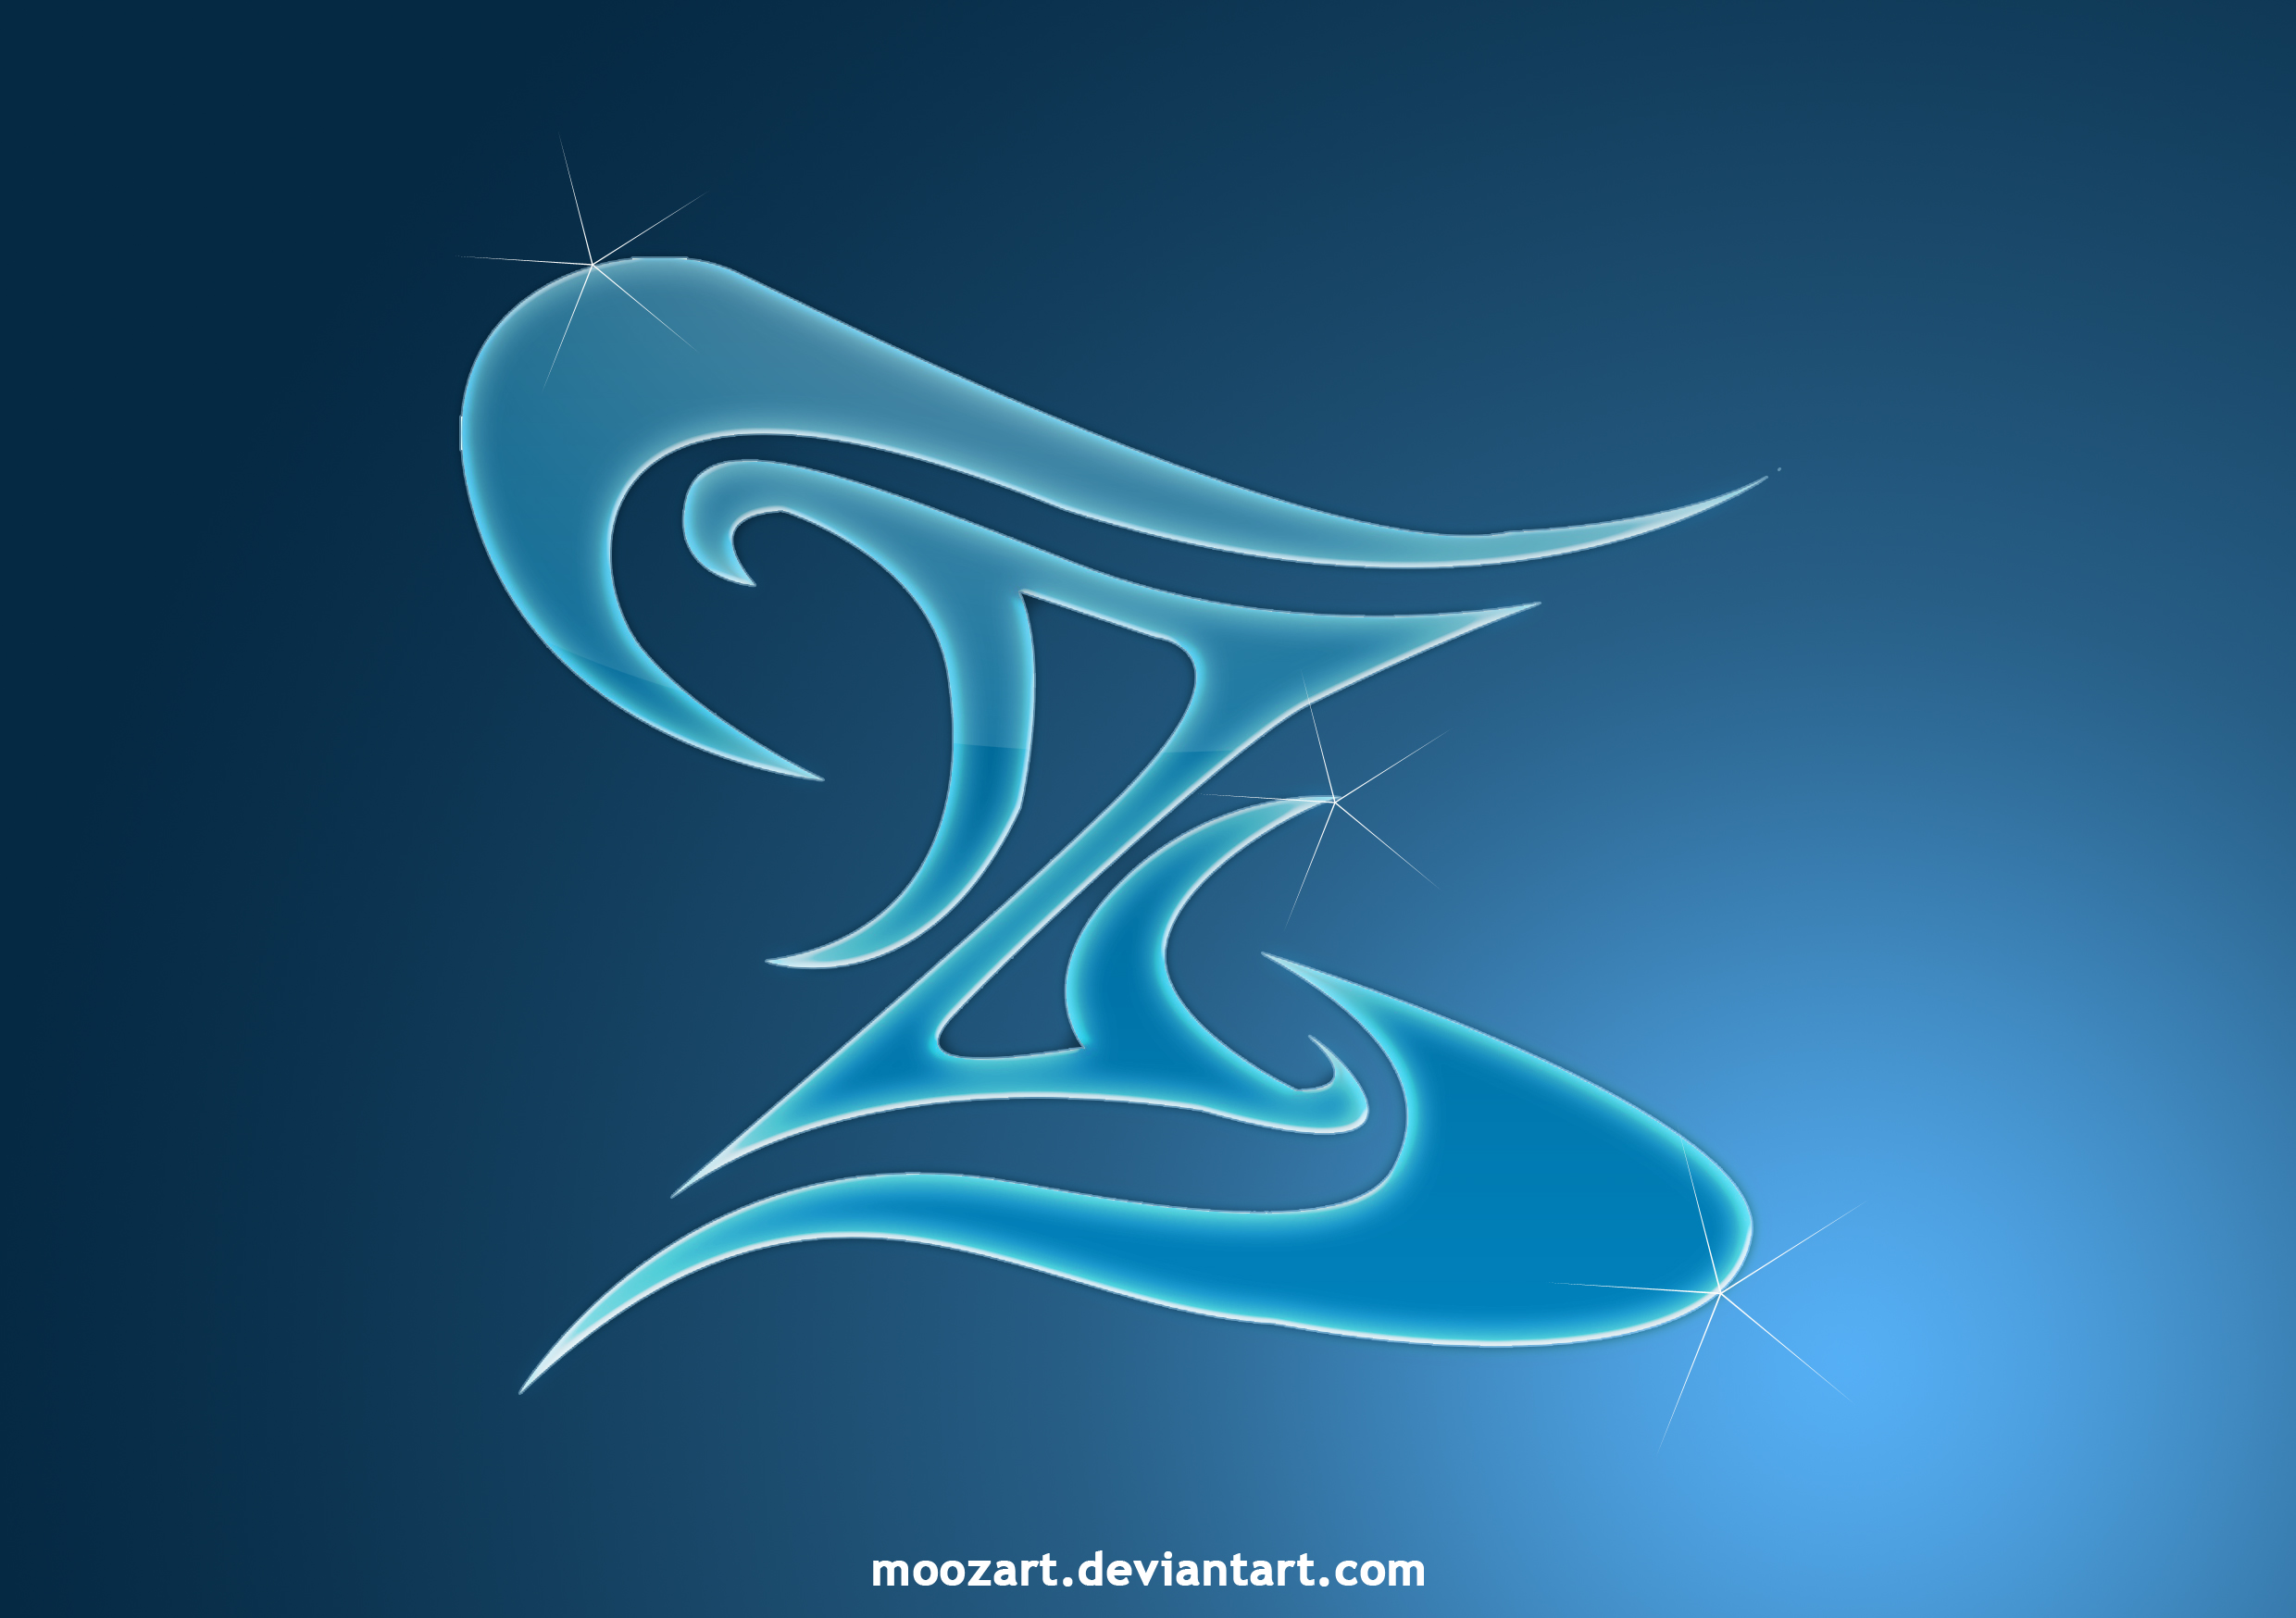 Gemini glass symbol by moozart 2 